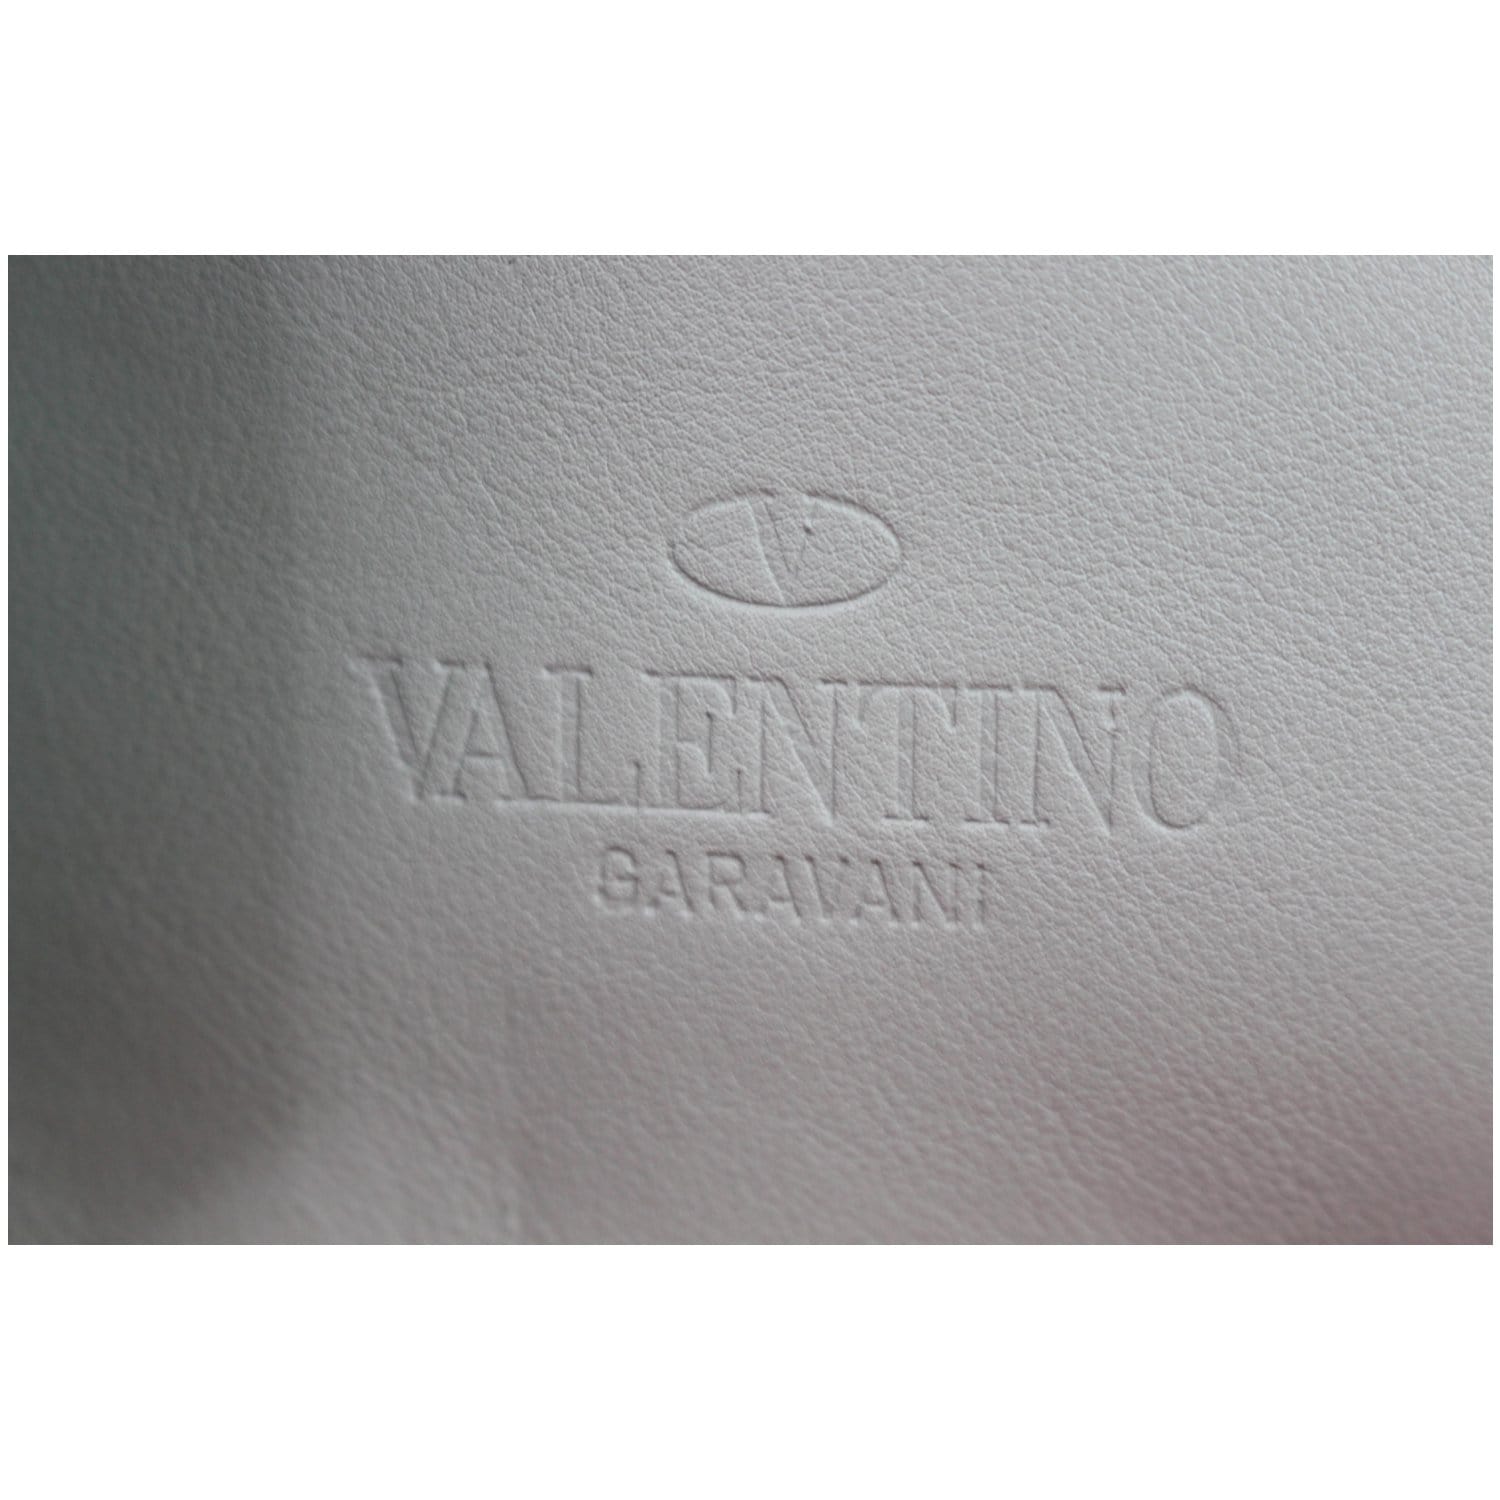 Rockstud leather backpack Valentino Garavani Grey in Leather - 19141183